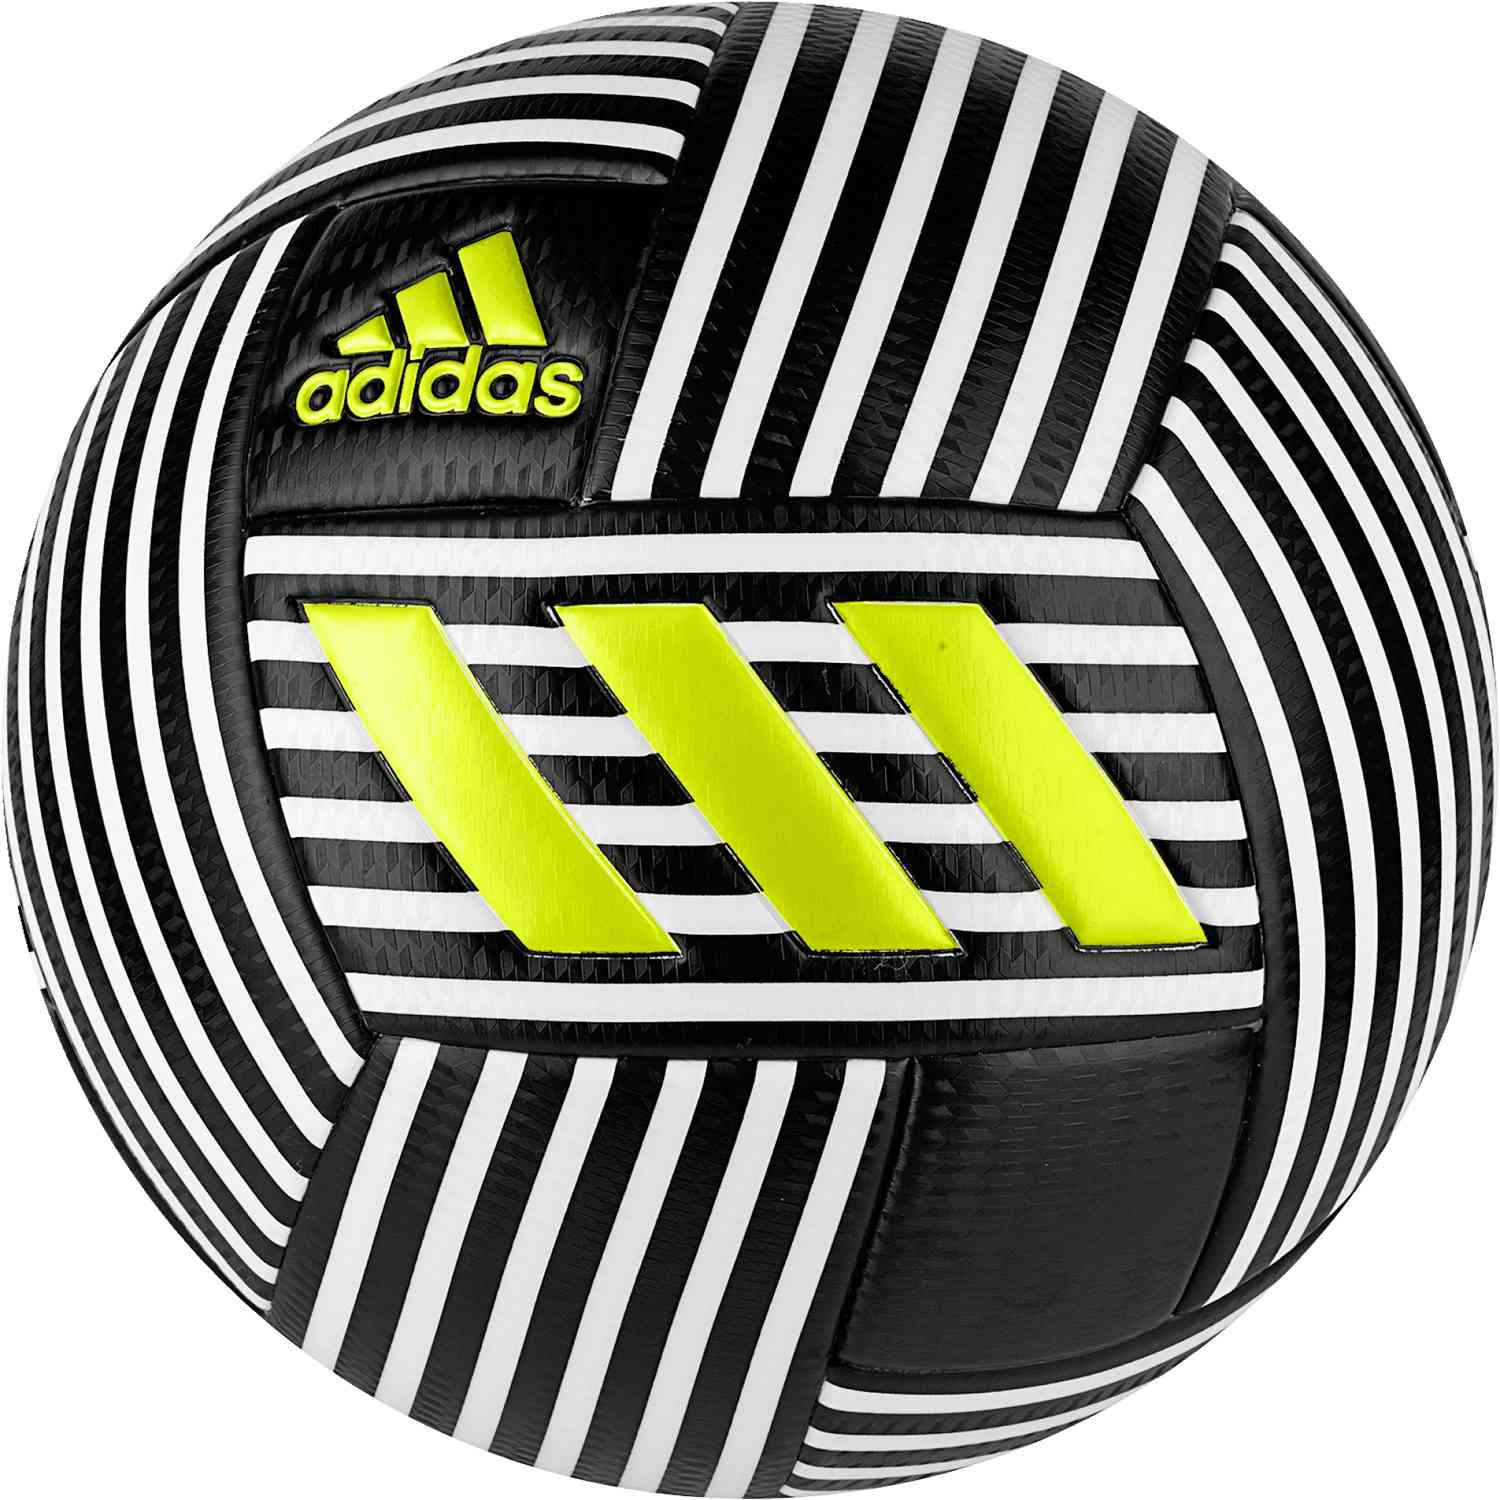 adidas Nemeziz Soccer Ball - White 